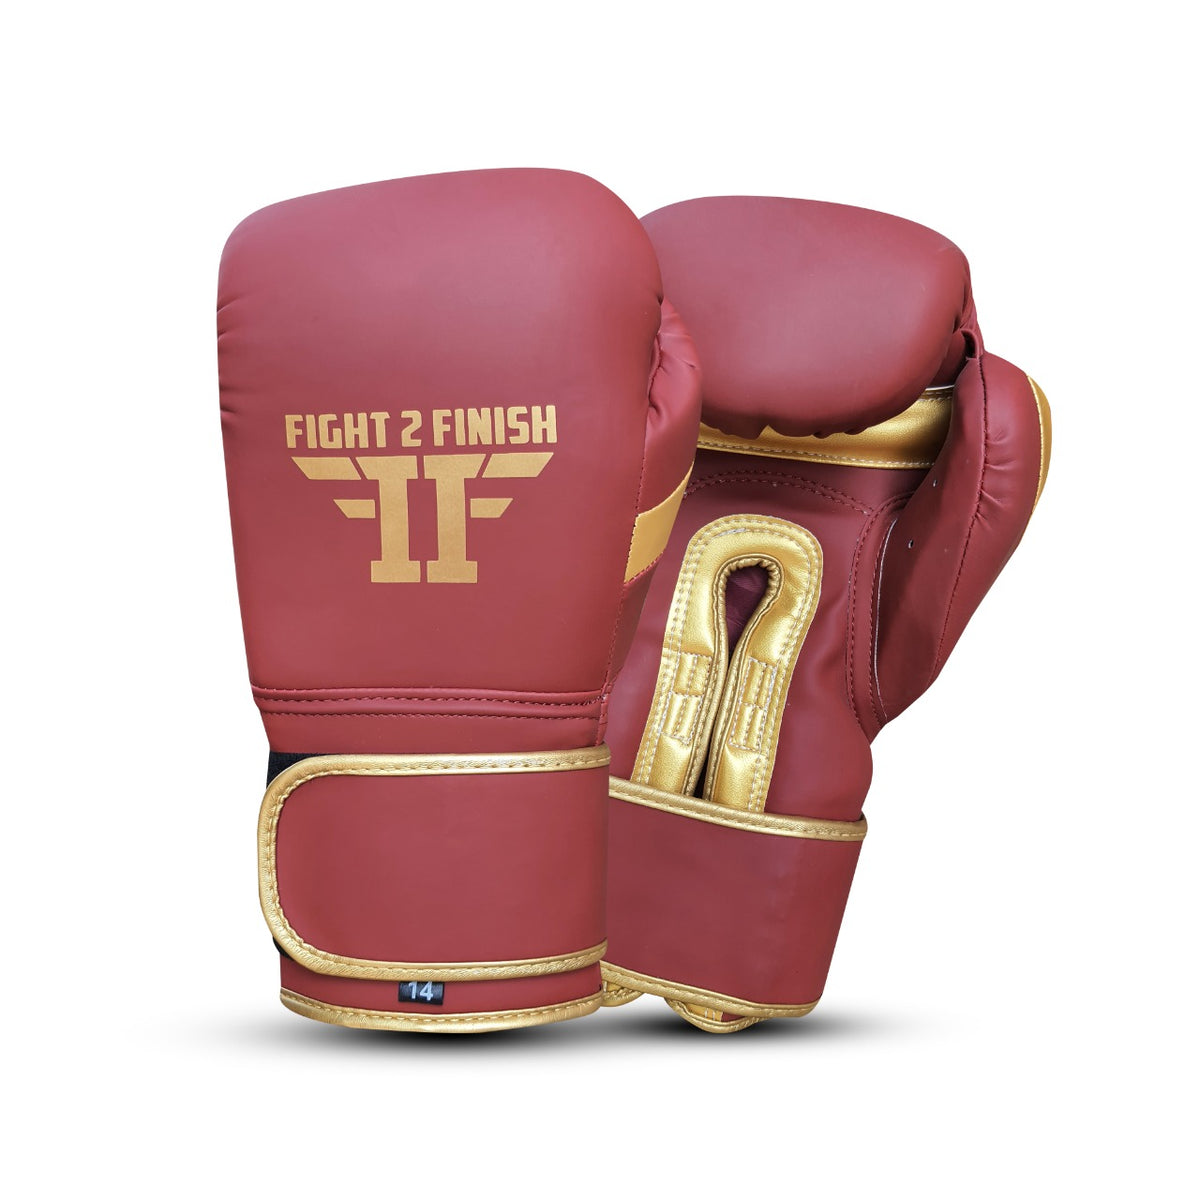 Elite Pro Fight Gloves – FIGHT 2 FINISH